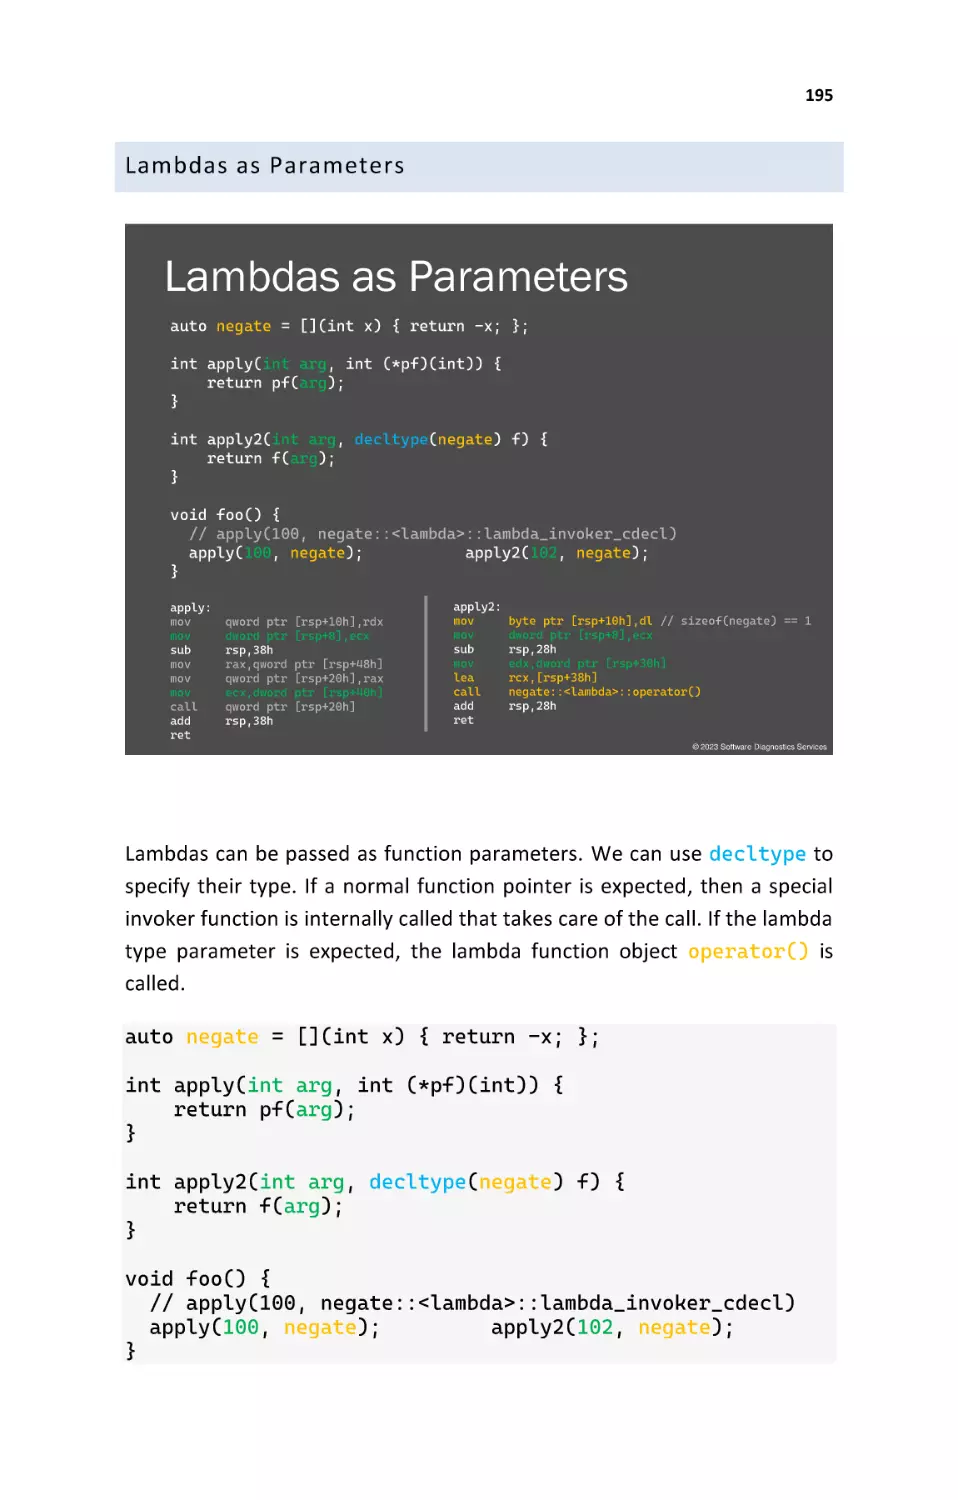 Lambdas as Parameters